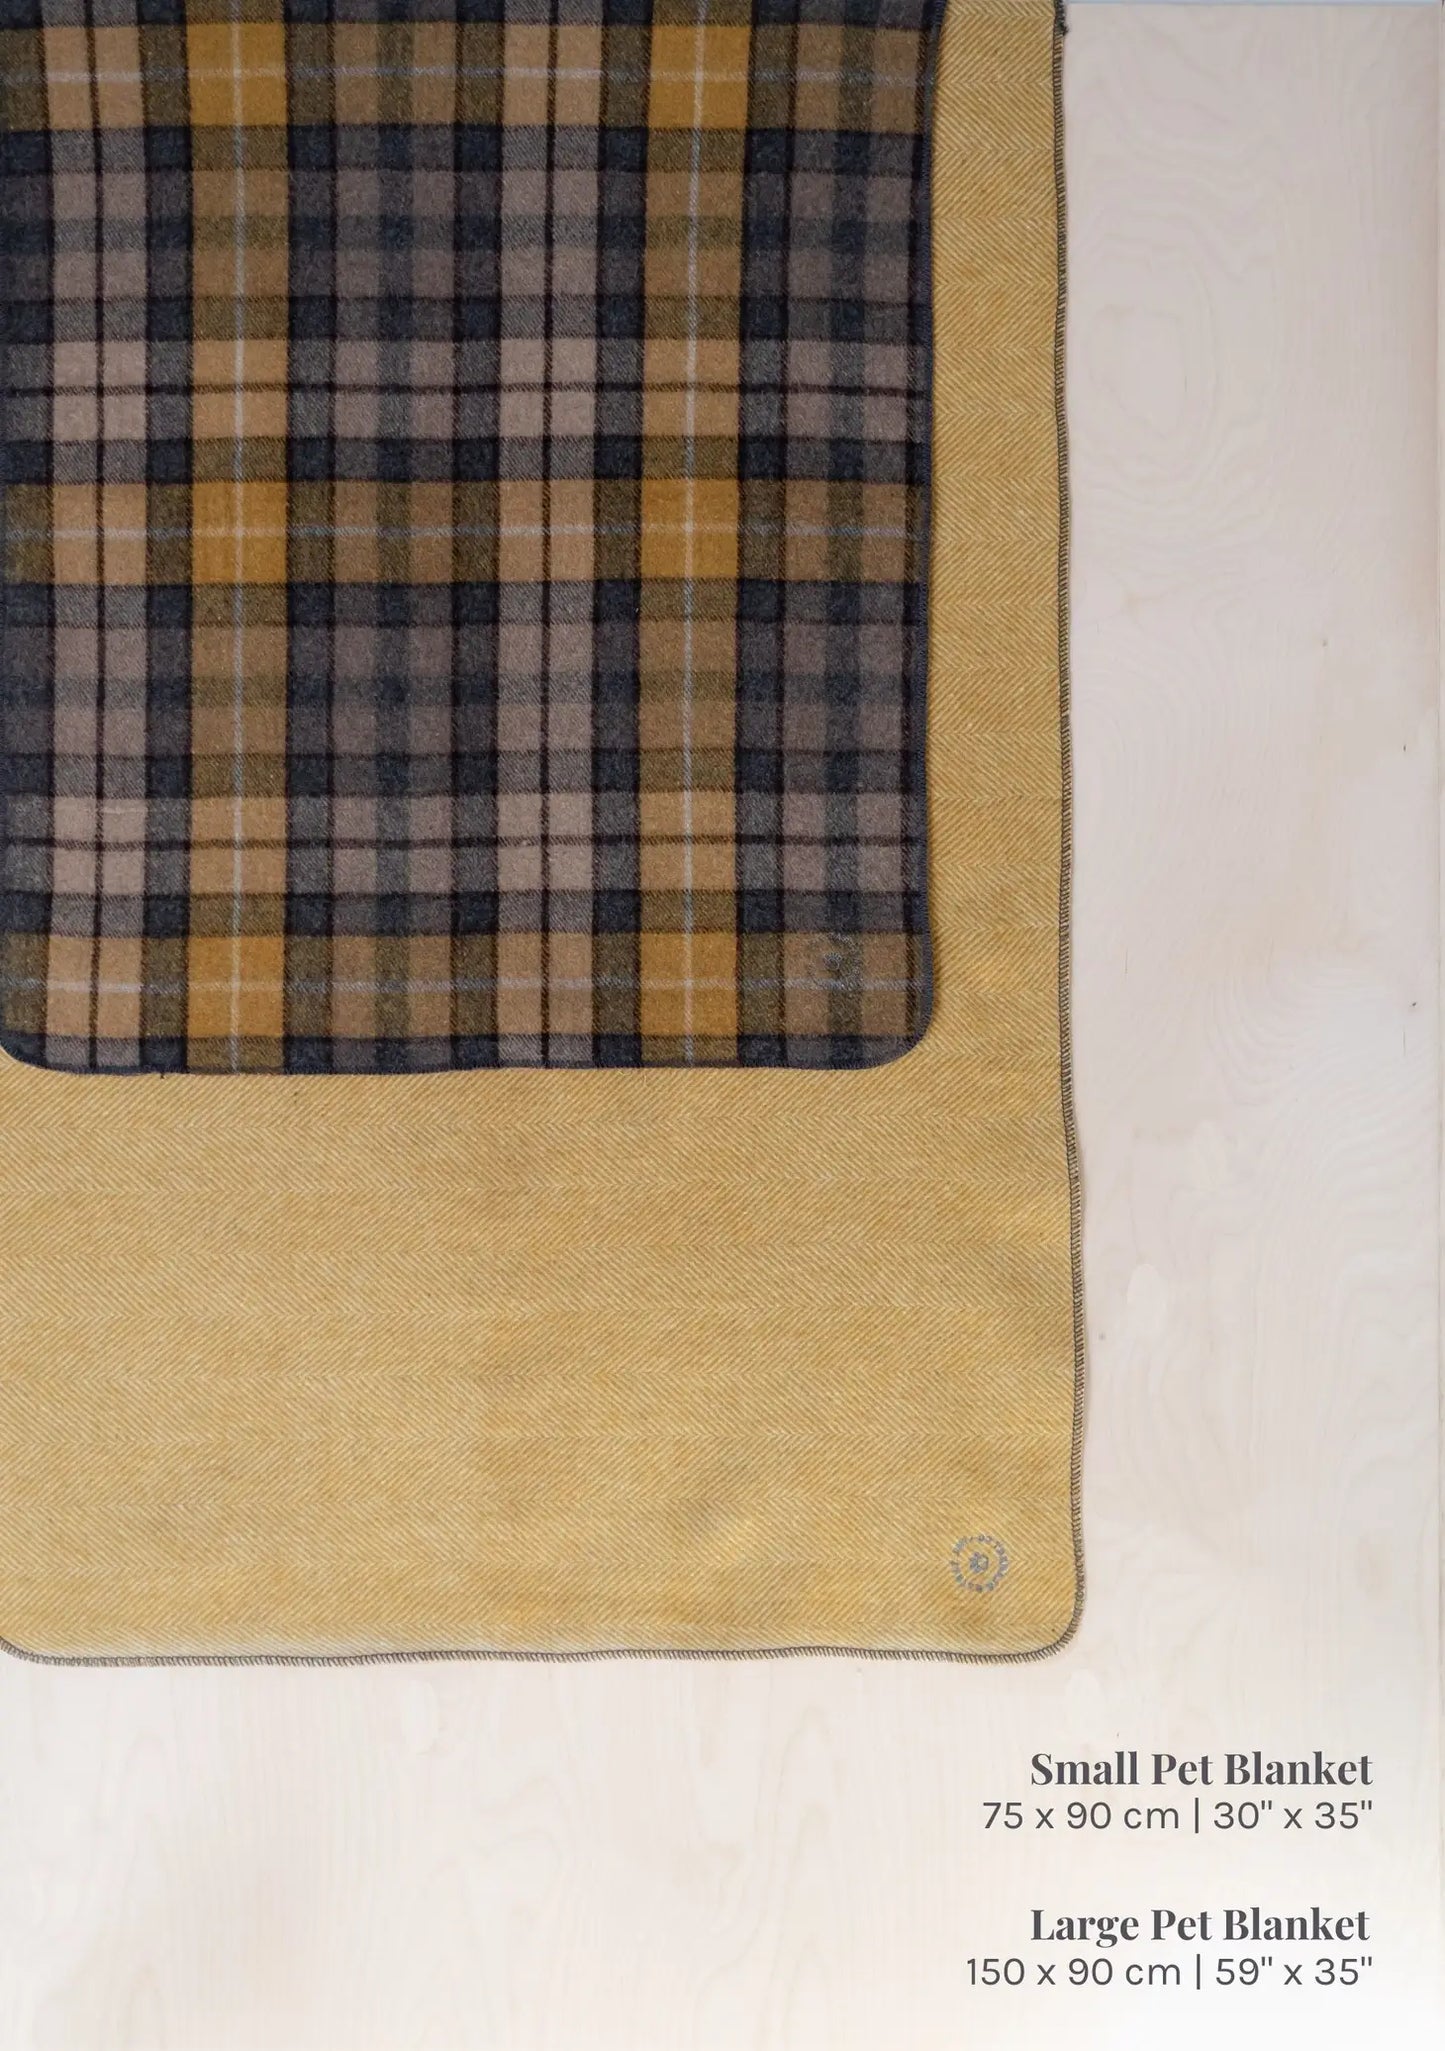 Recycled Wool Small Pet Blanket in Black Watch Tartan